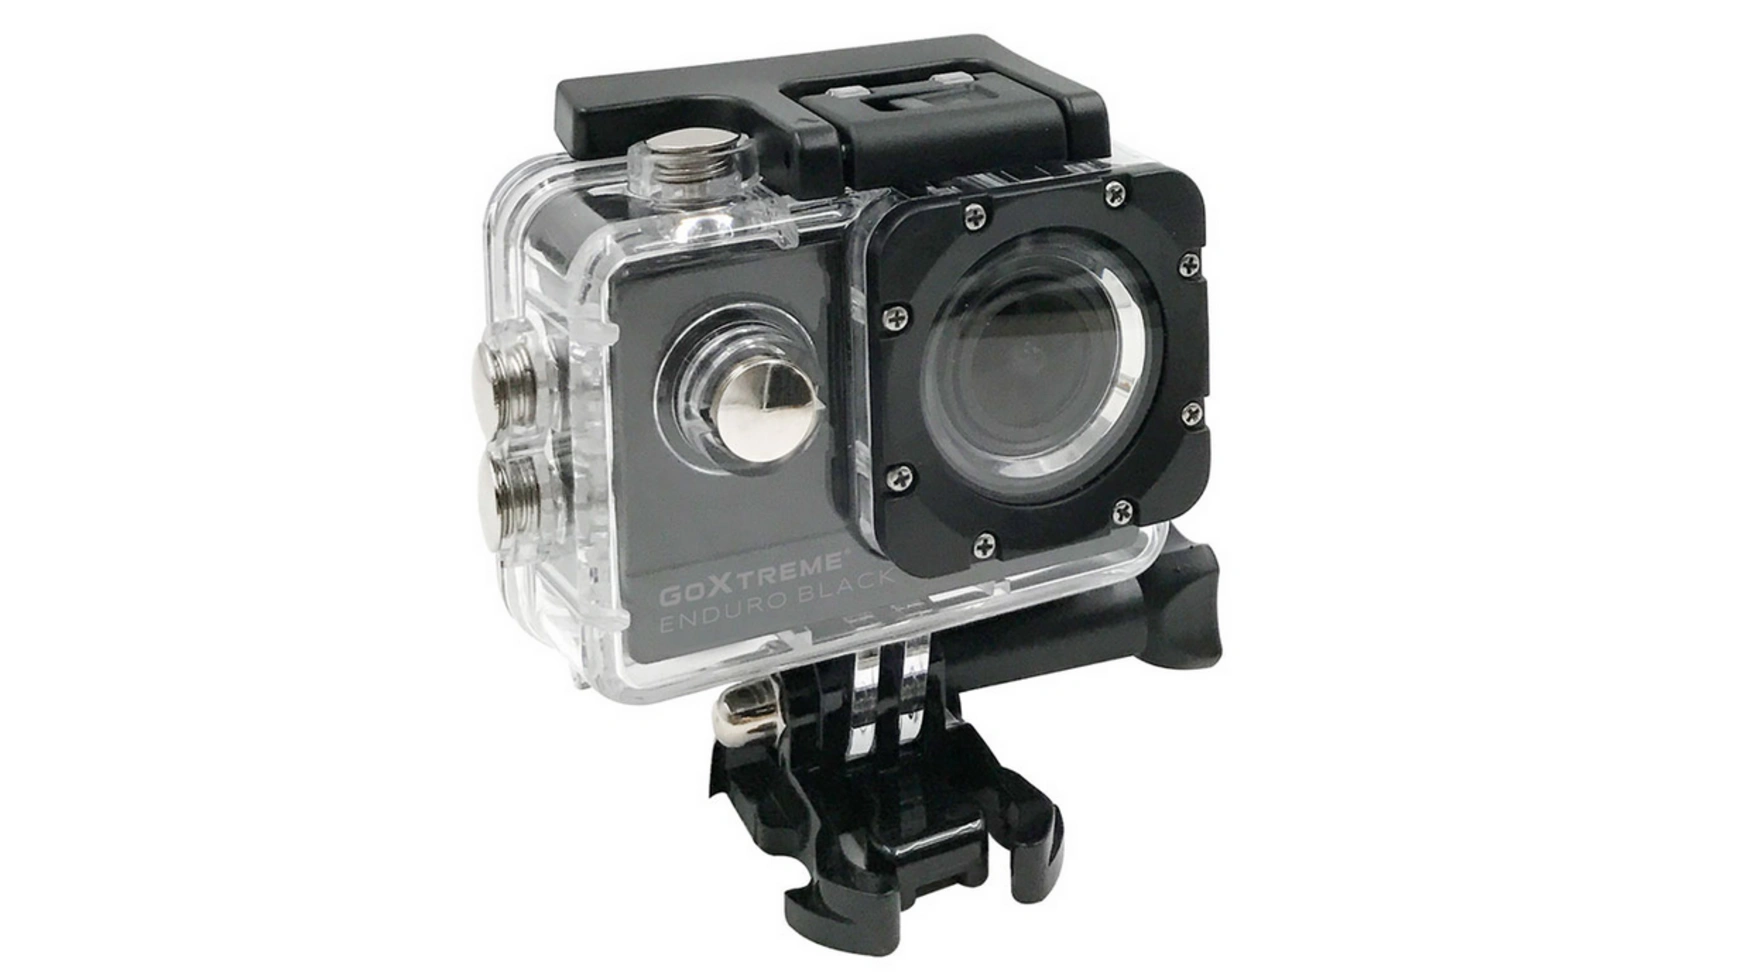 Goxtreme эндуро-черная экшн-камера 4k No Brand goxtreme эндуро черная экшн камера 4k no brand